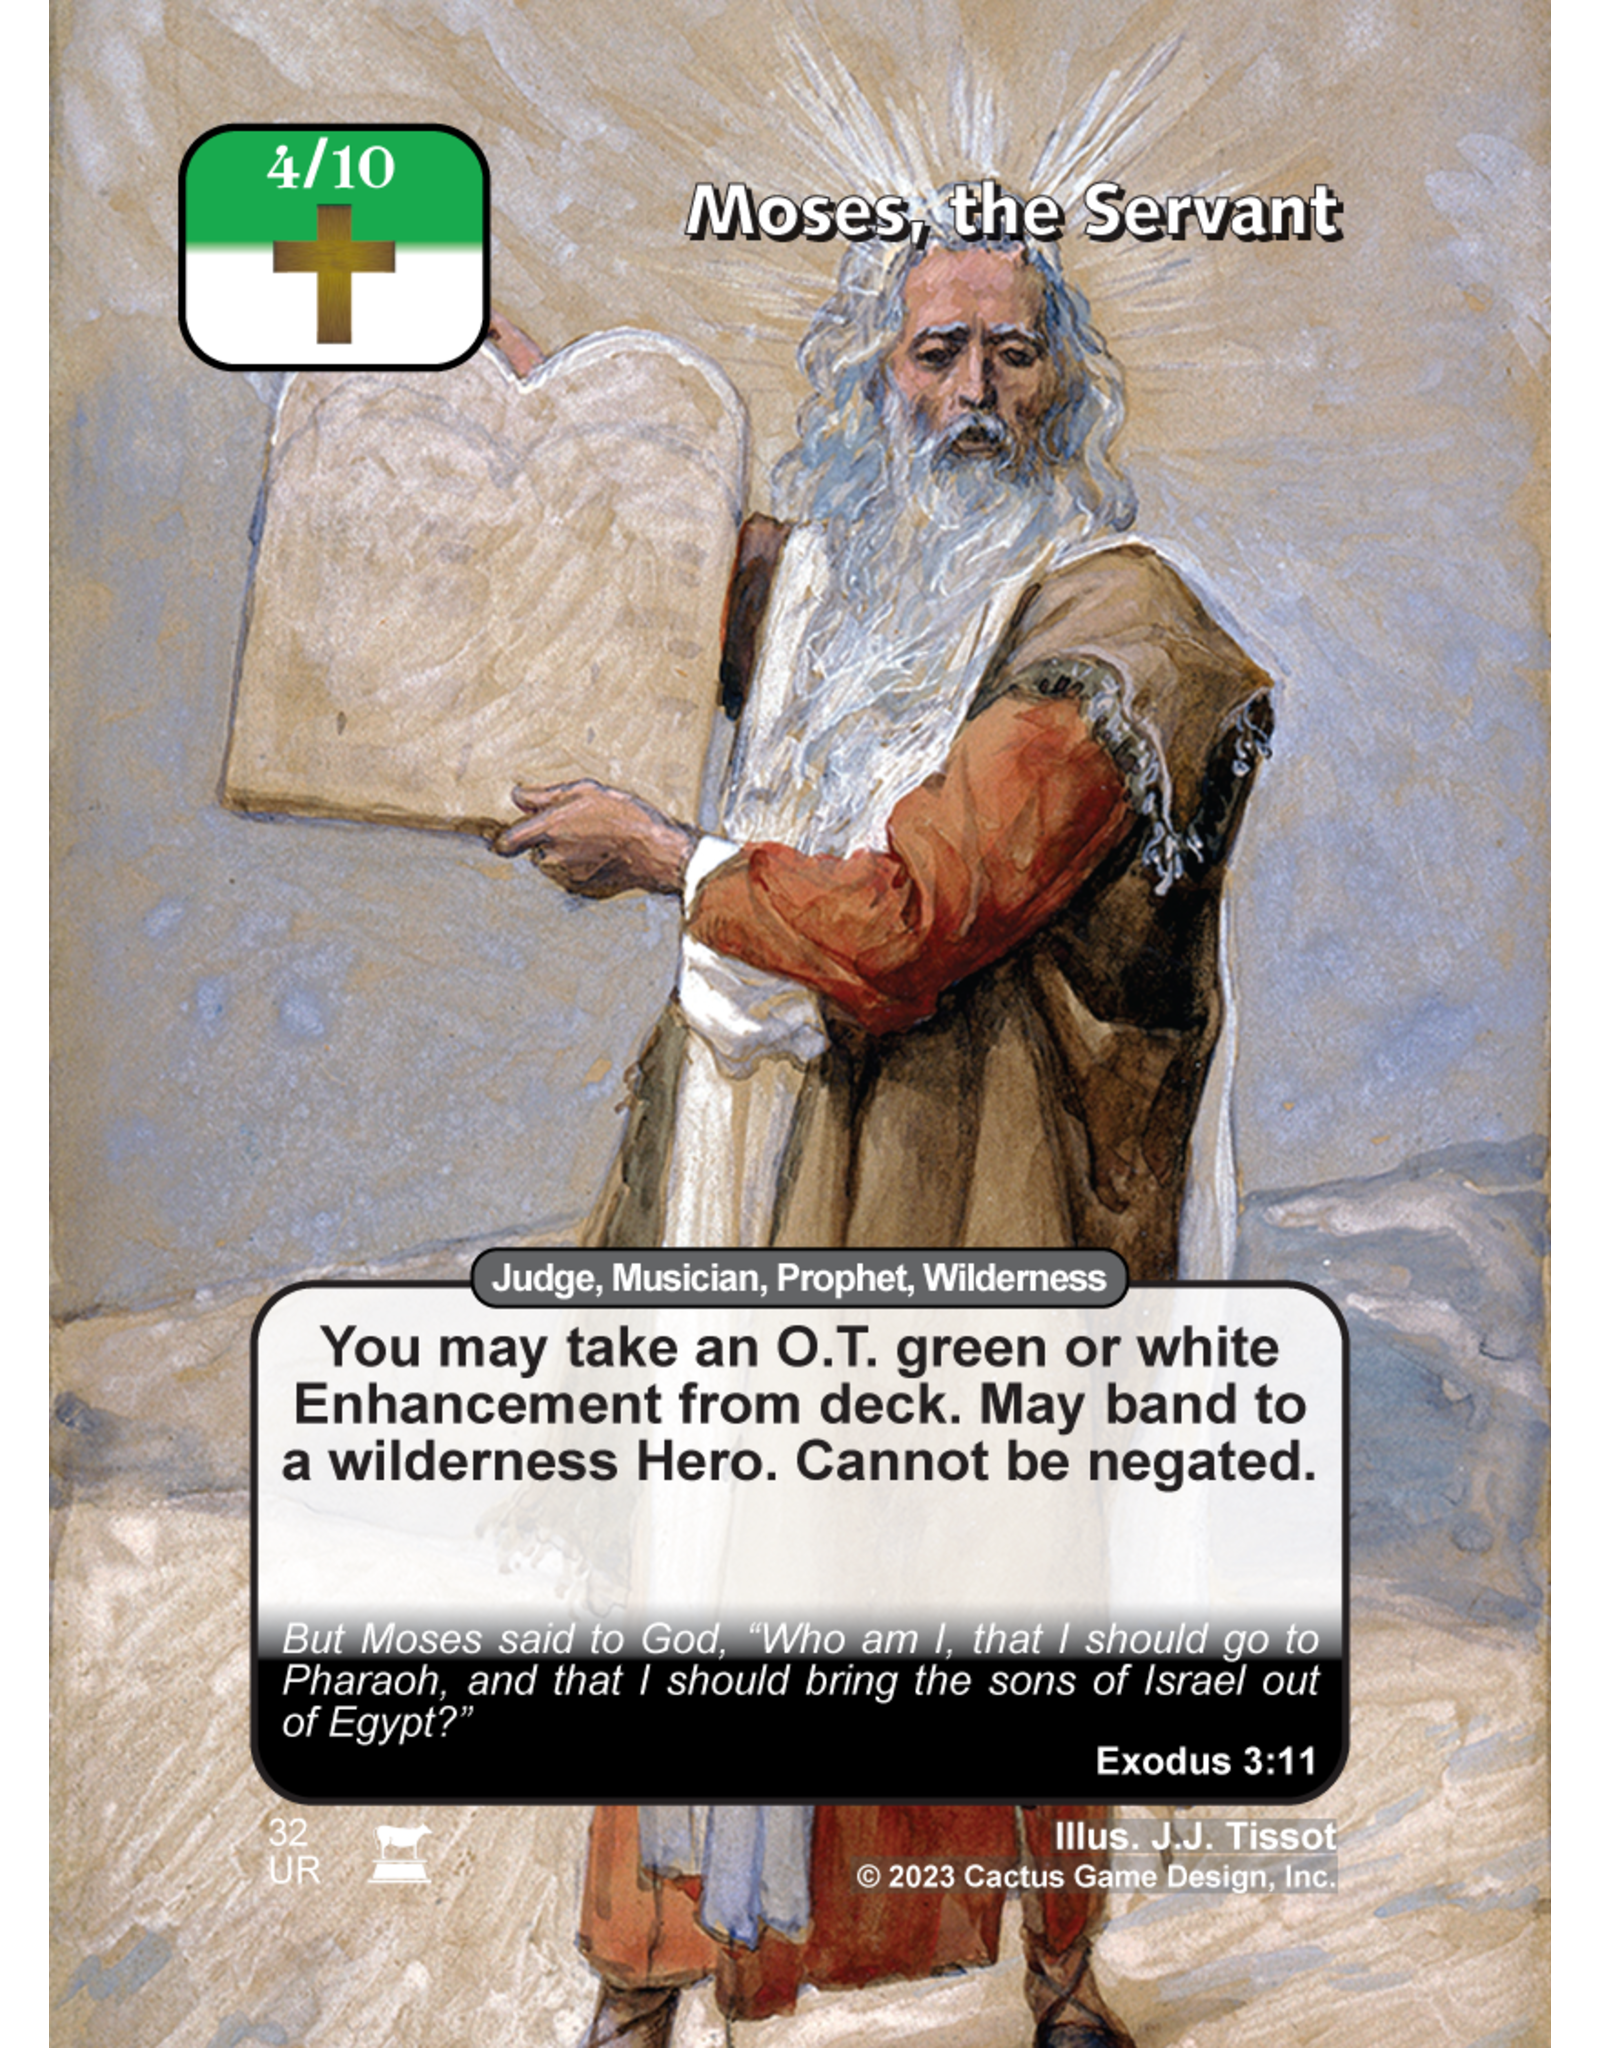 IR: Moses, the Servant